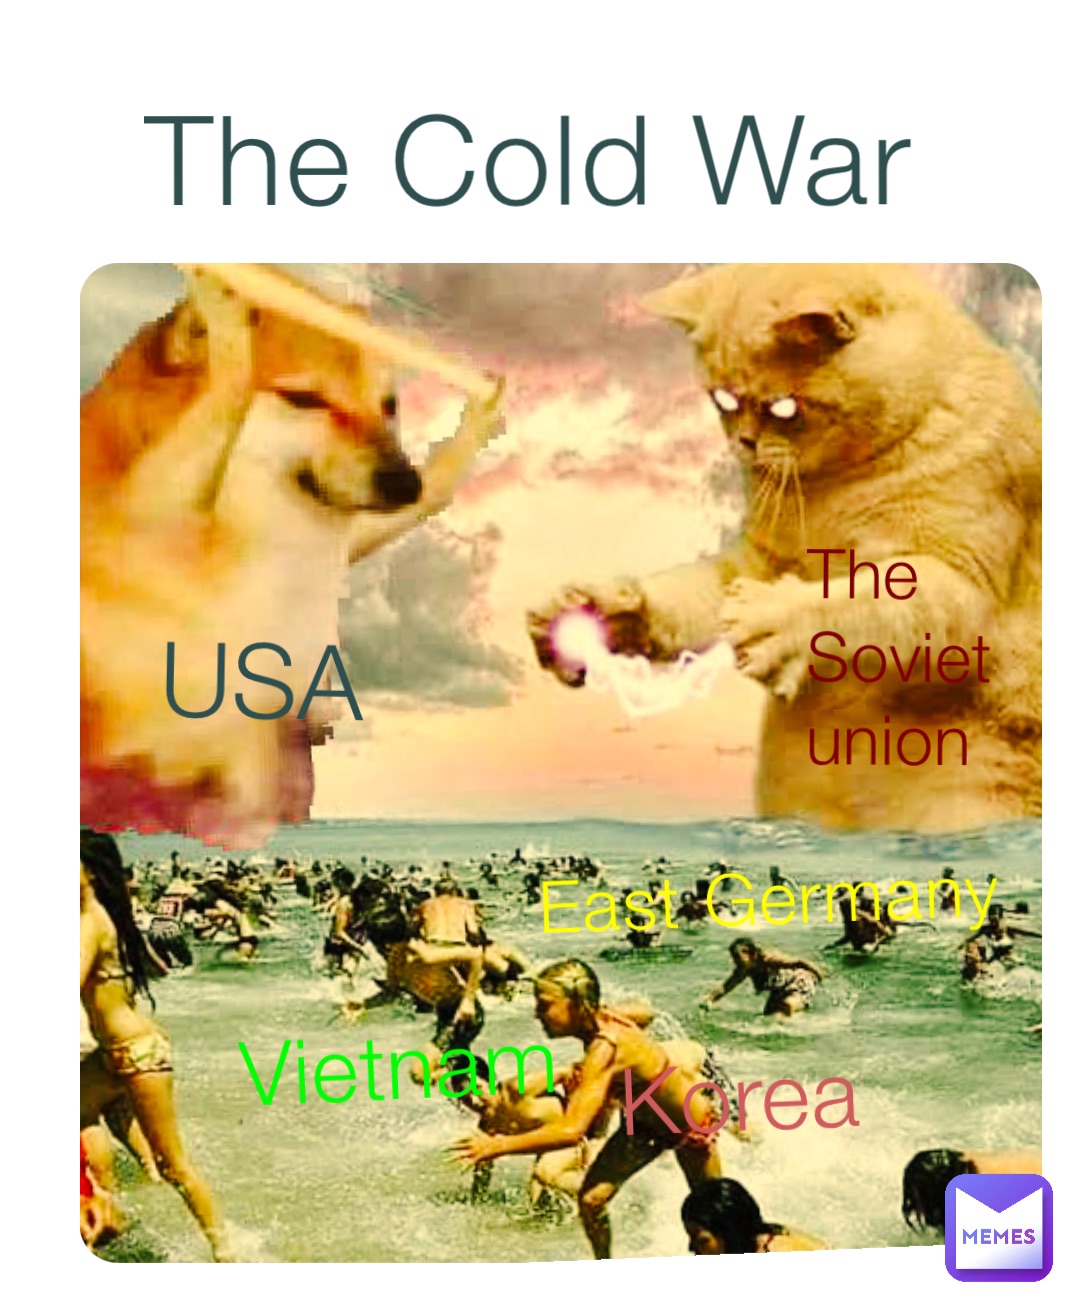 USA The Soviet union Vietnam Korea The Cold War￼ East Germany